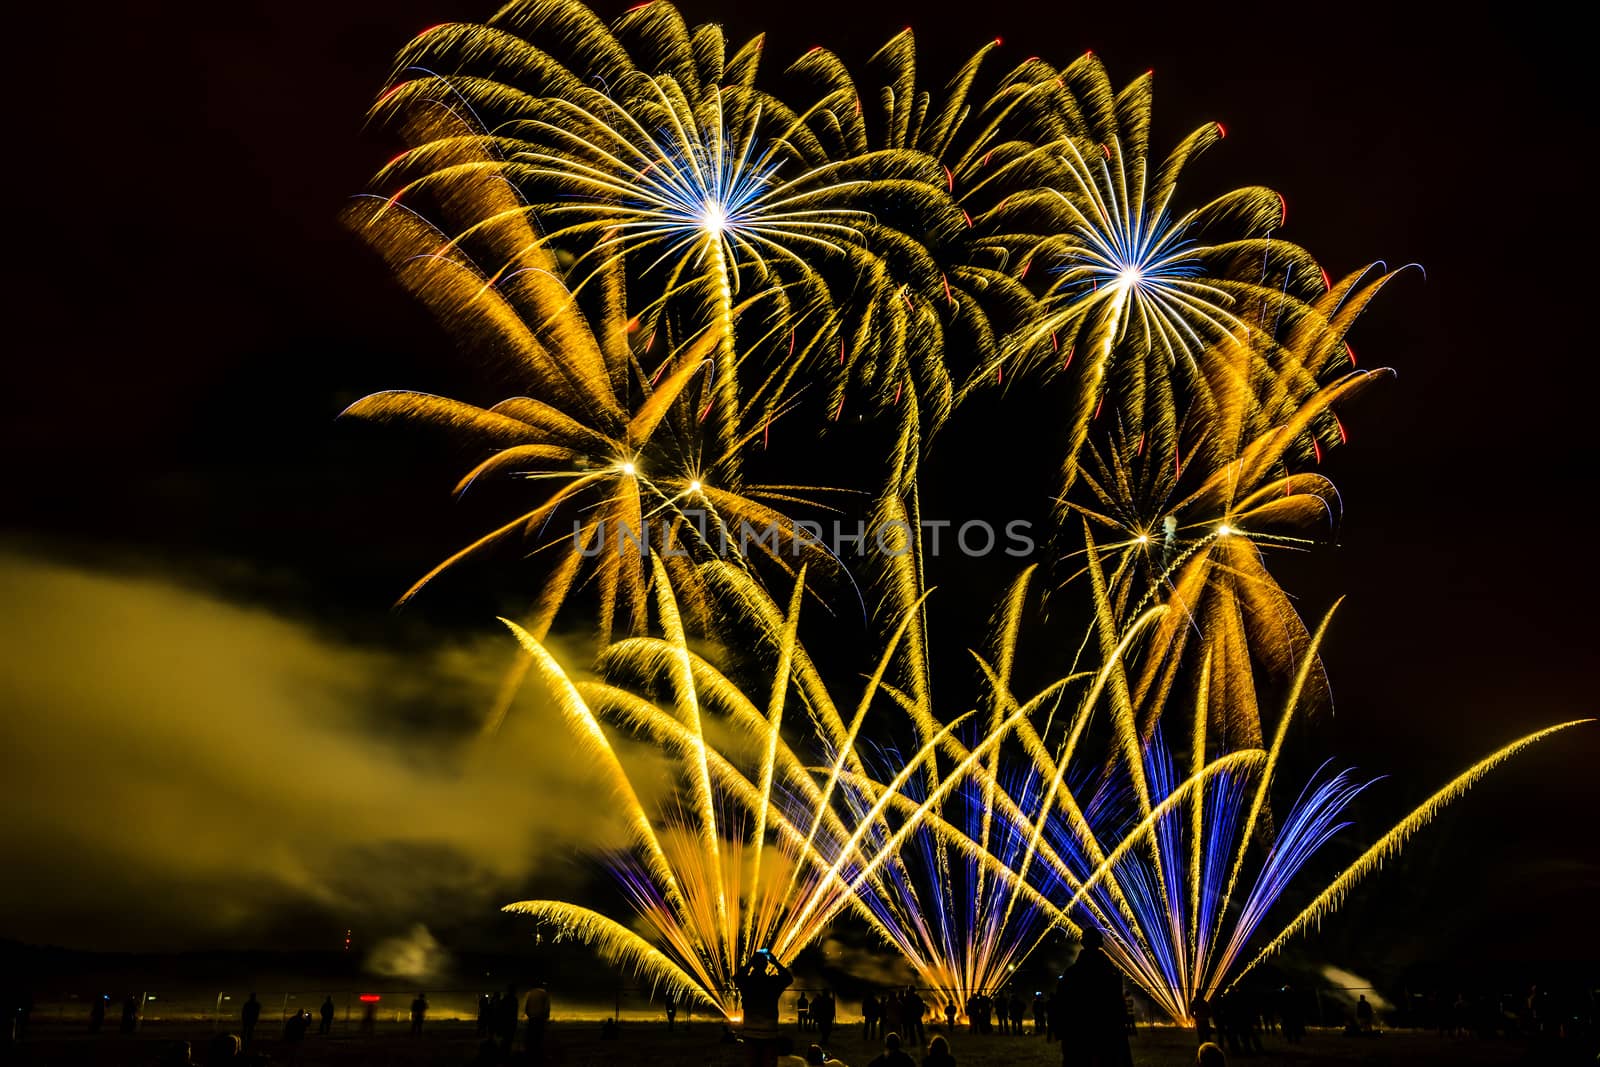 Colorful fireworks over night sky by Attila